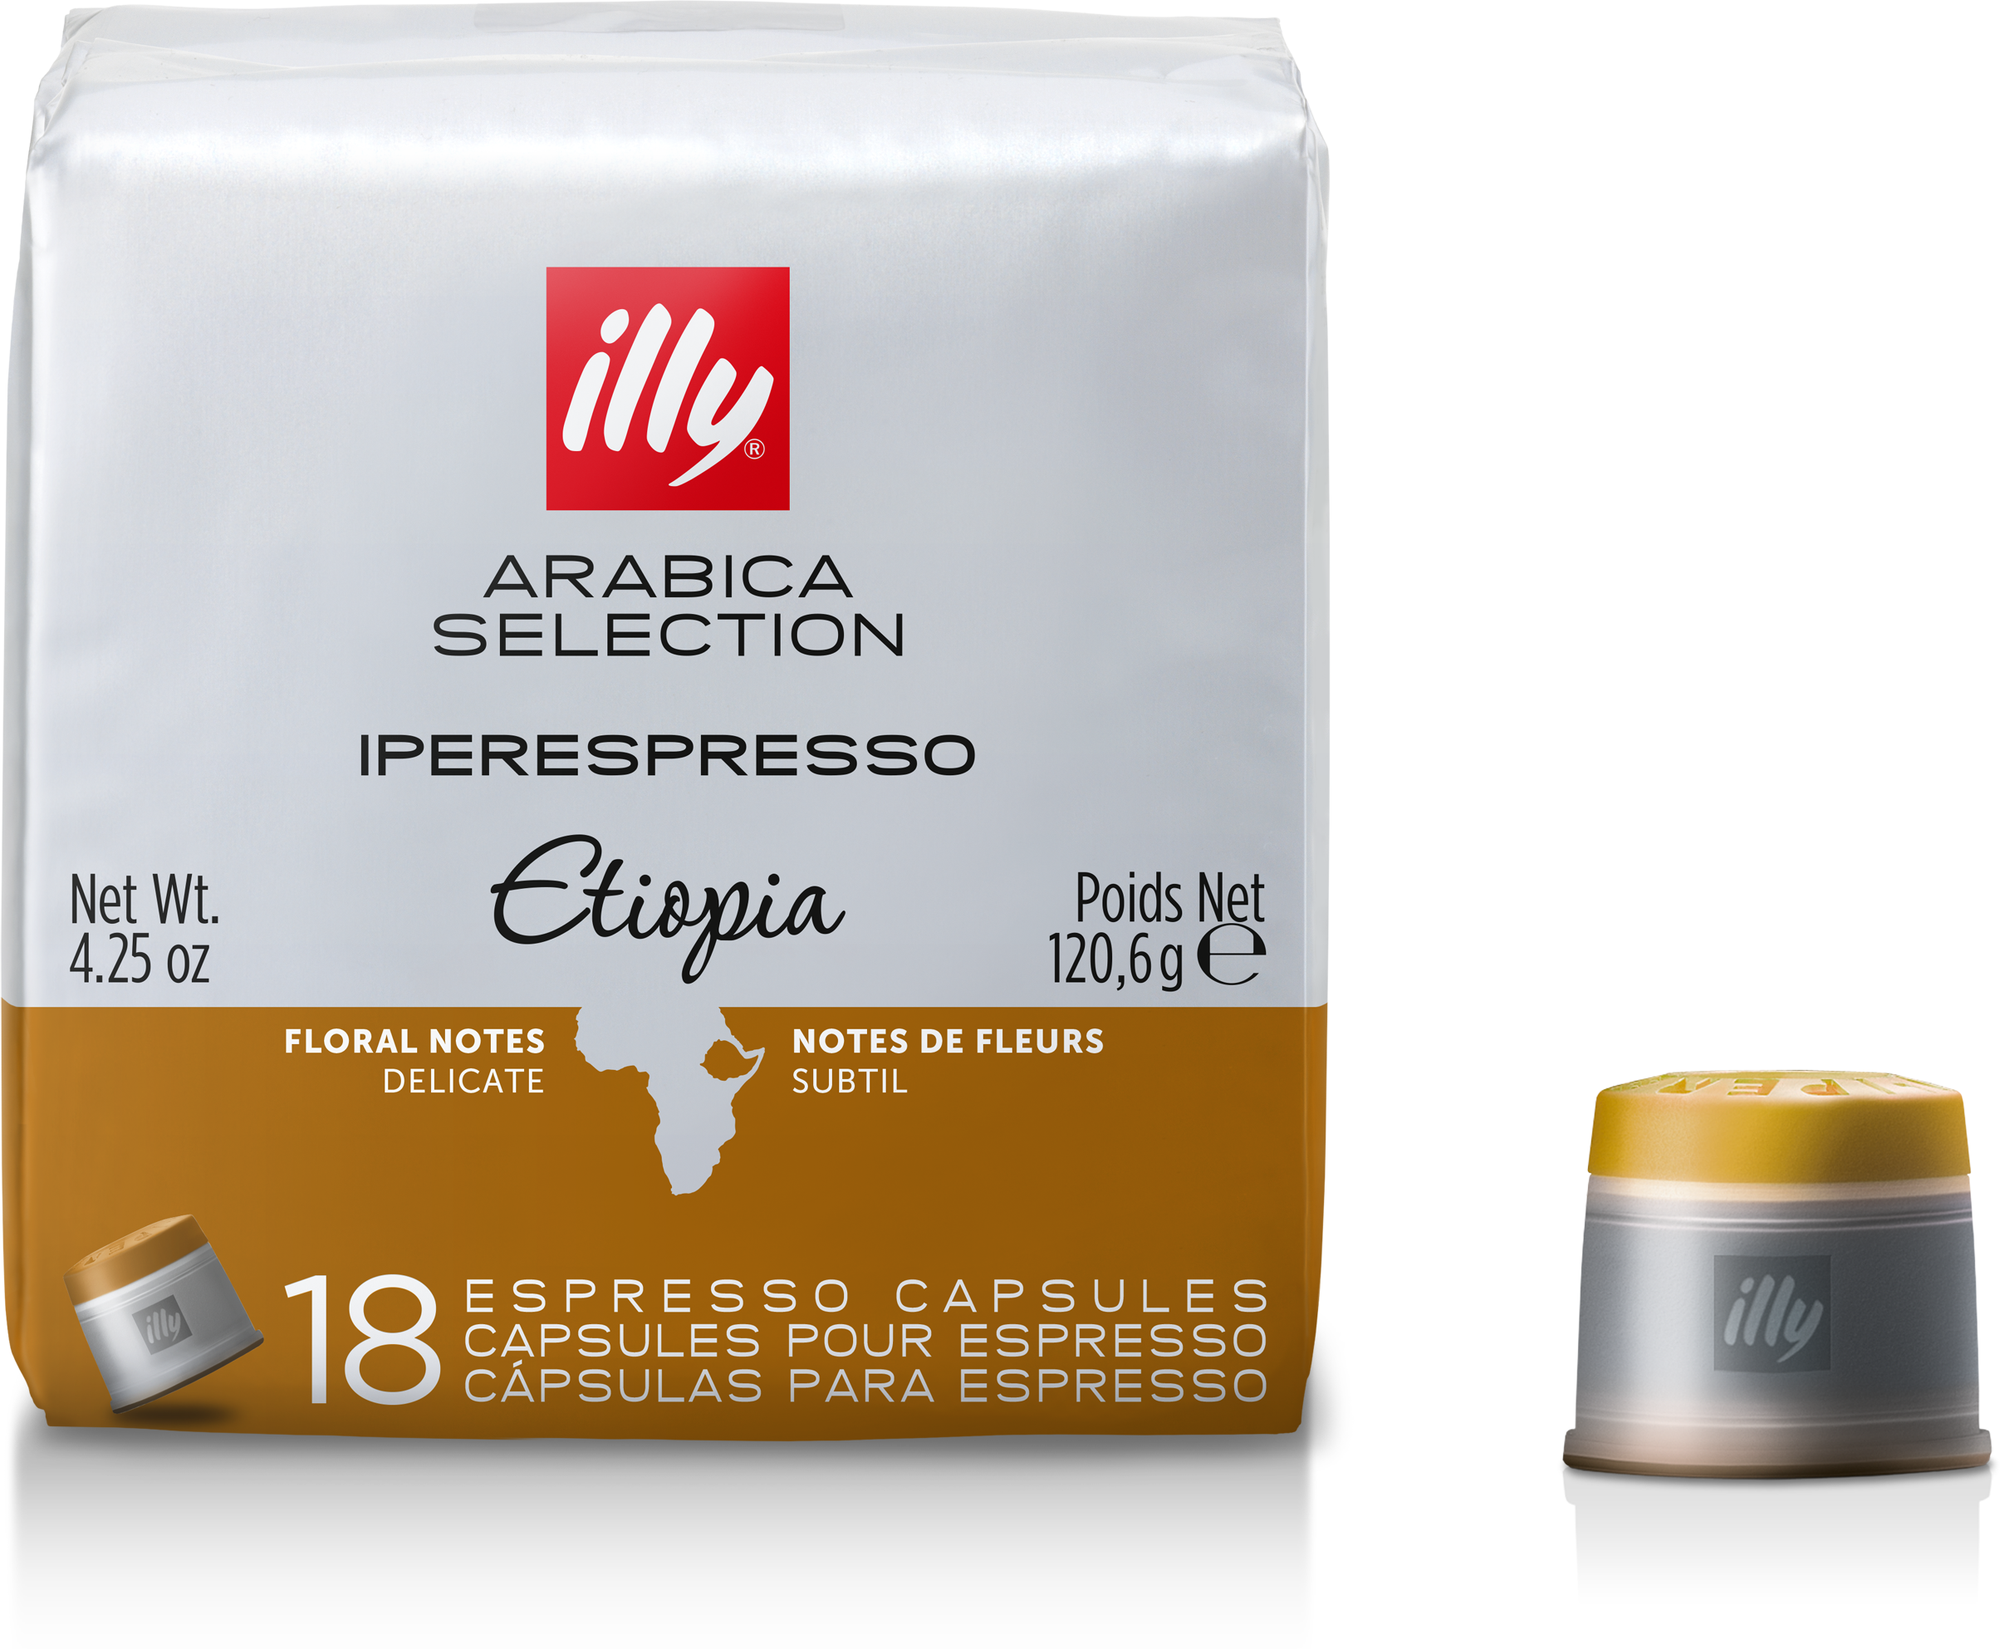 Кофе illy в капсулах iperespresso, Арабика Селекшн, Эфиопия, 18 капс